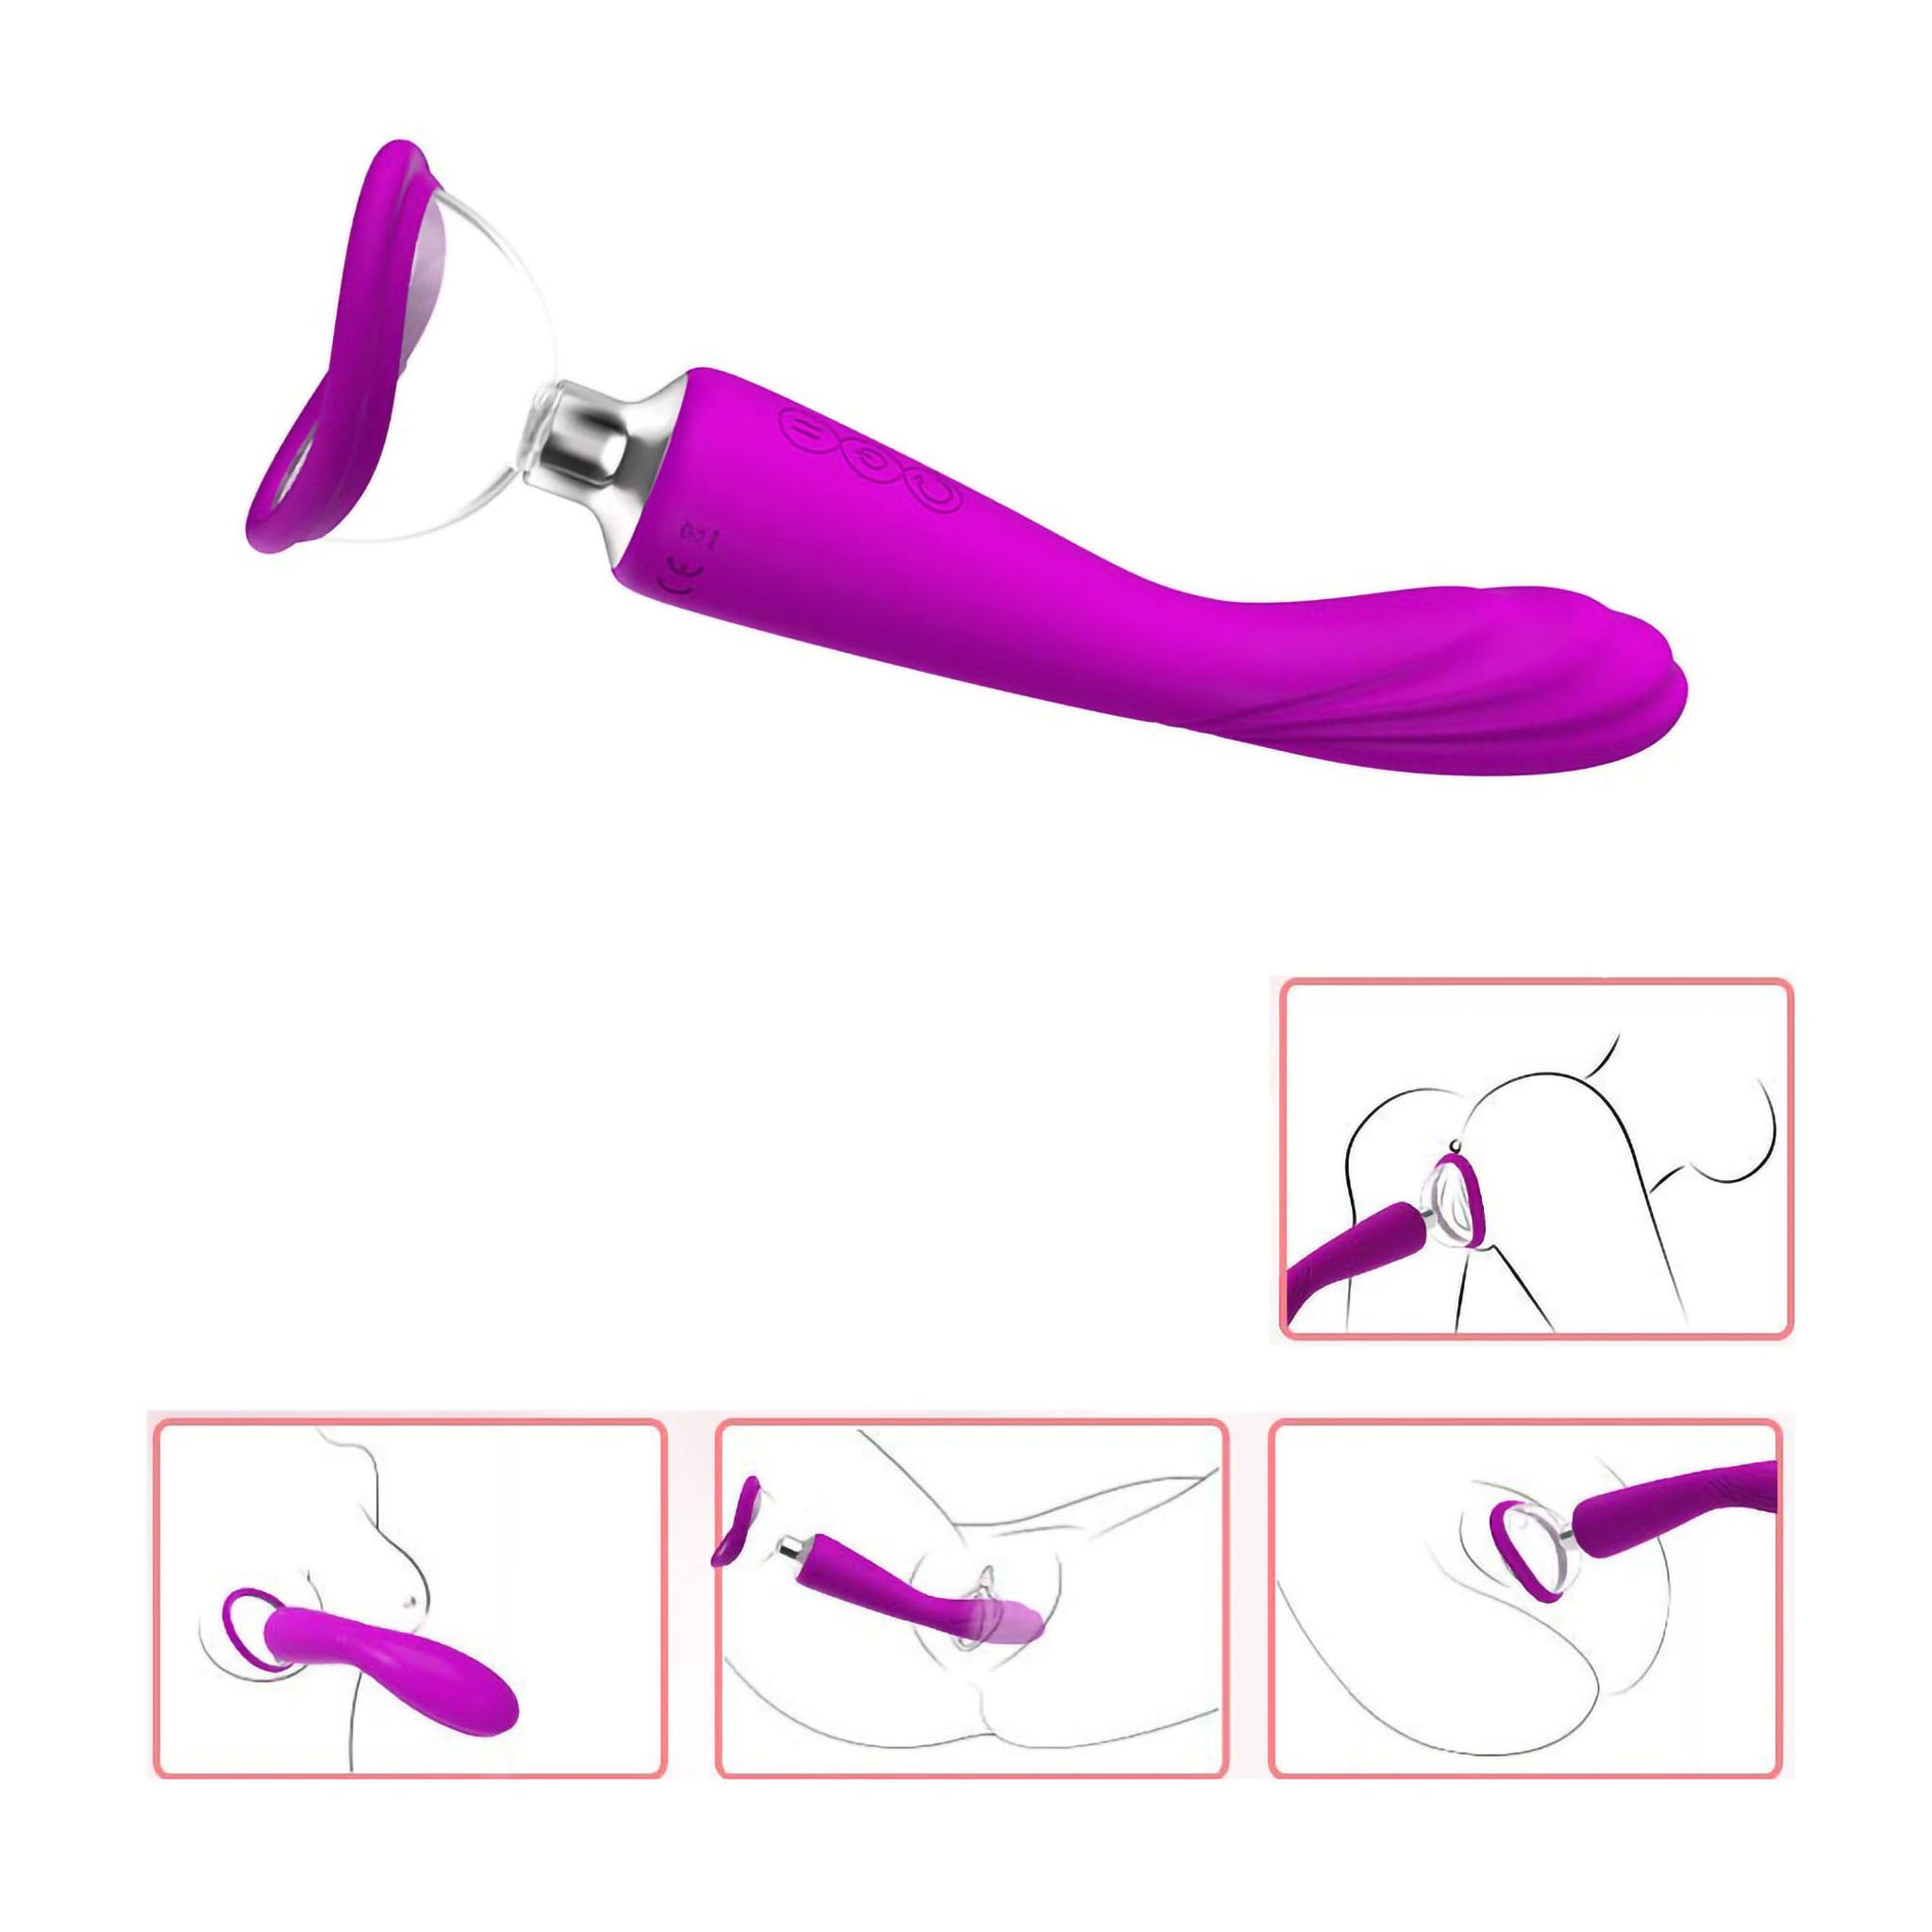 Automatic Power Suction Vaginal Pussy Pump G-spot Vibrator Sex-toys for Women